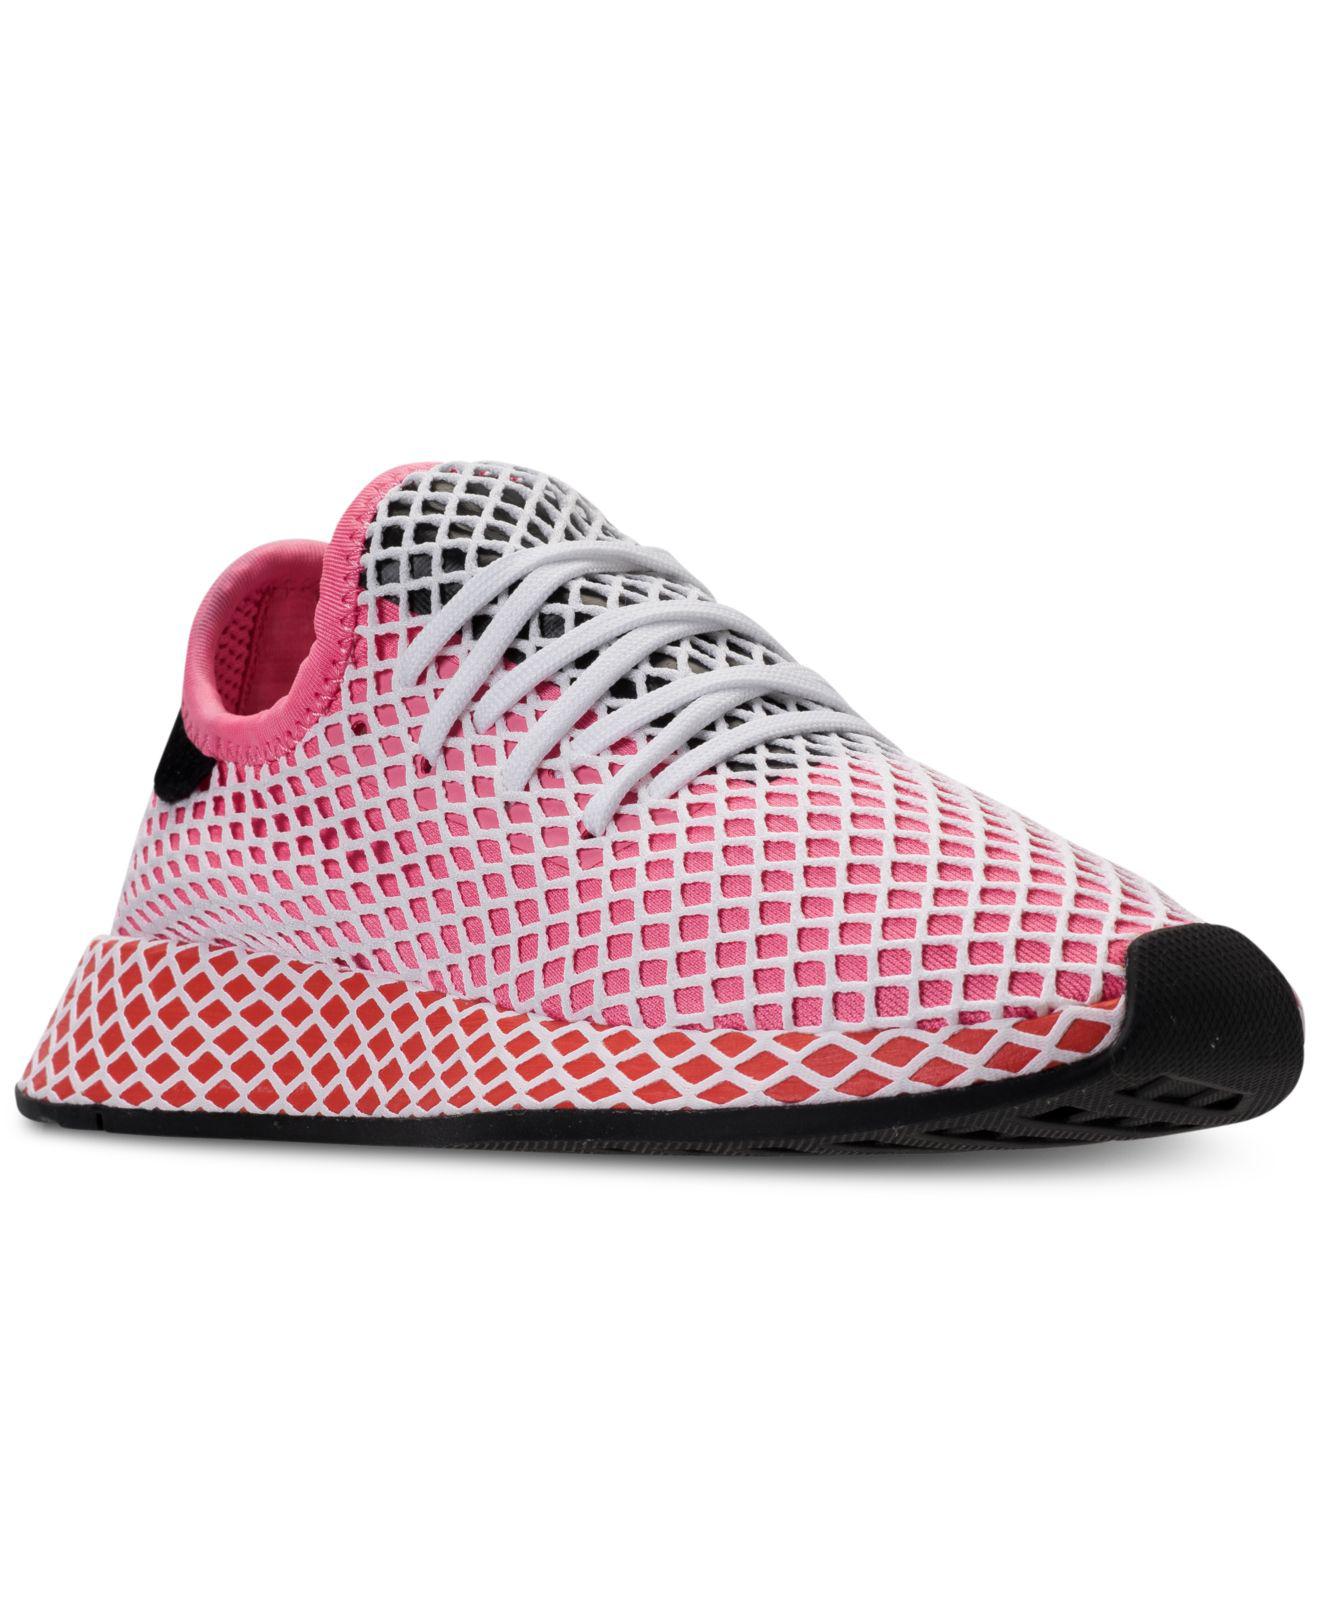 adidas Deerupt Runner in Pink/Orange (Pink) - Lyst